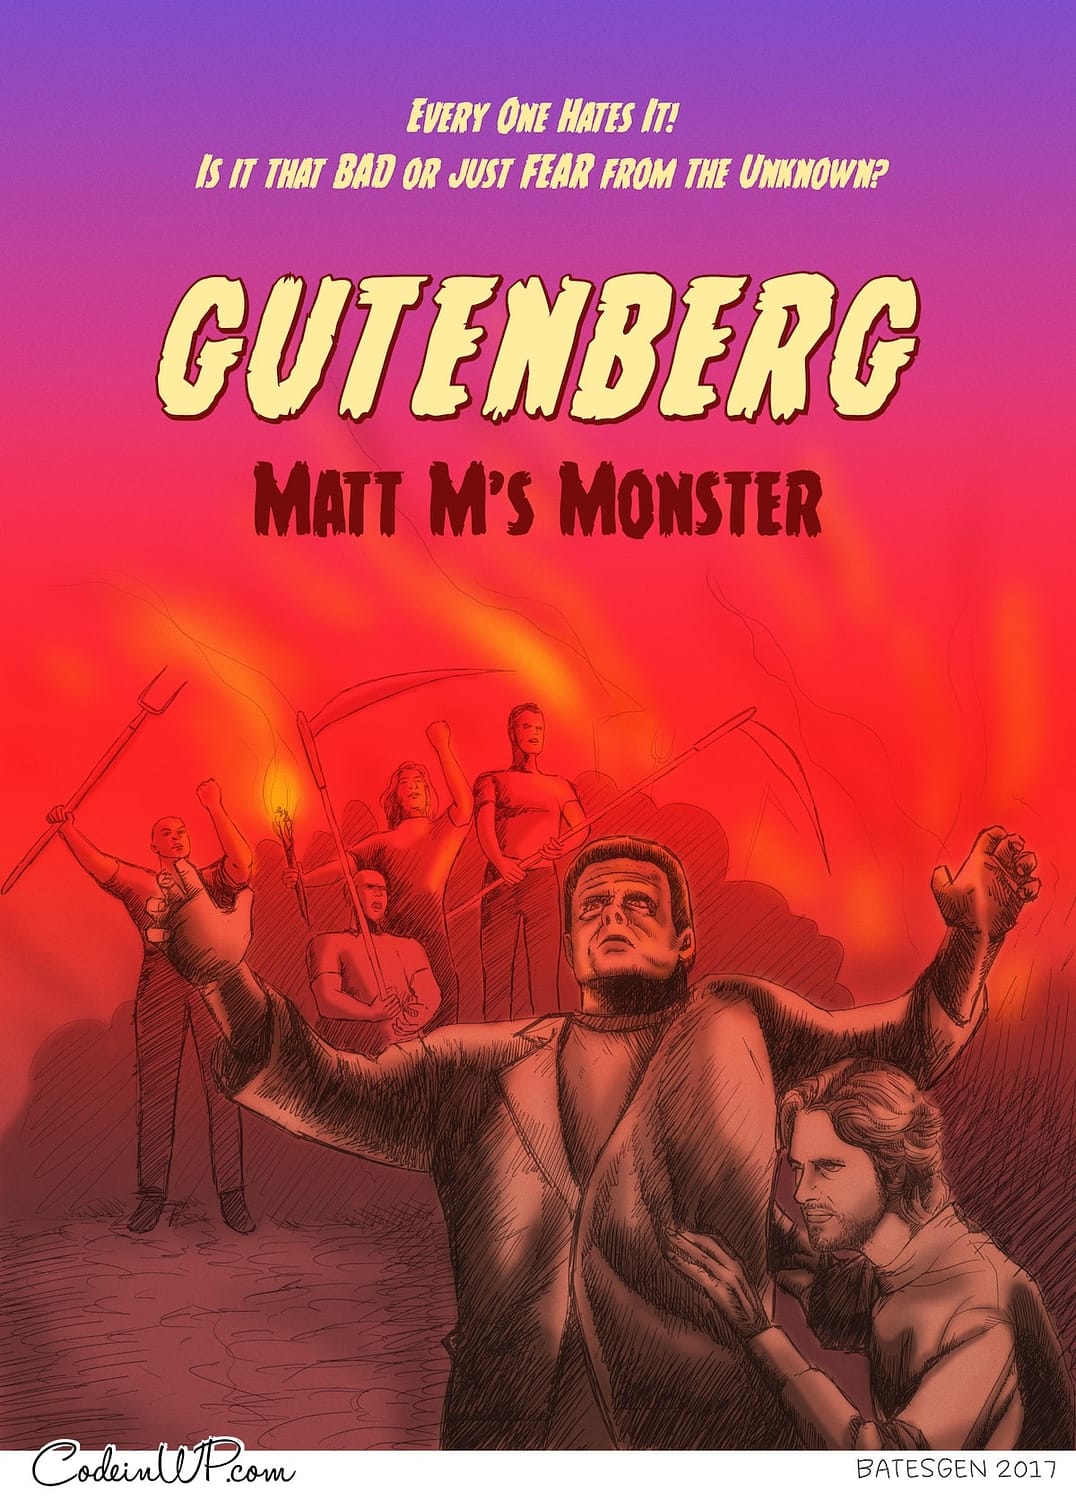 Gutenberg, is still not core. Not yet